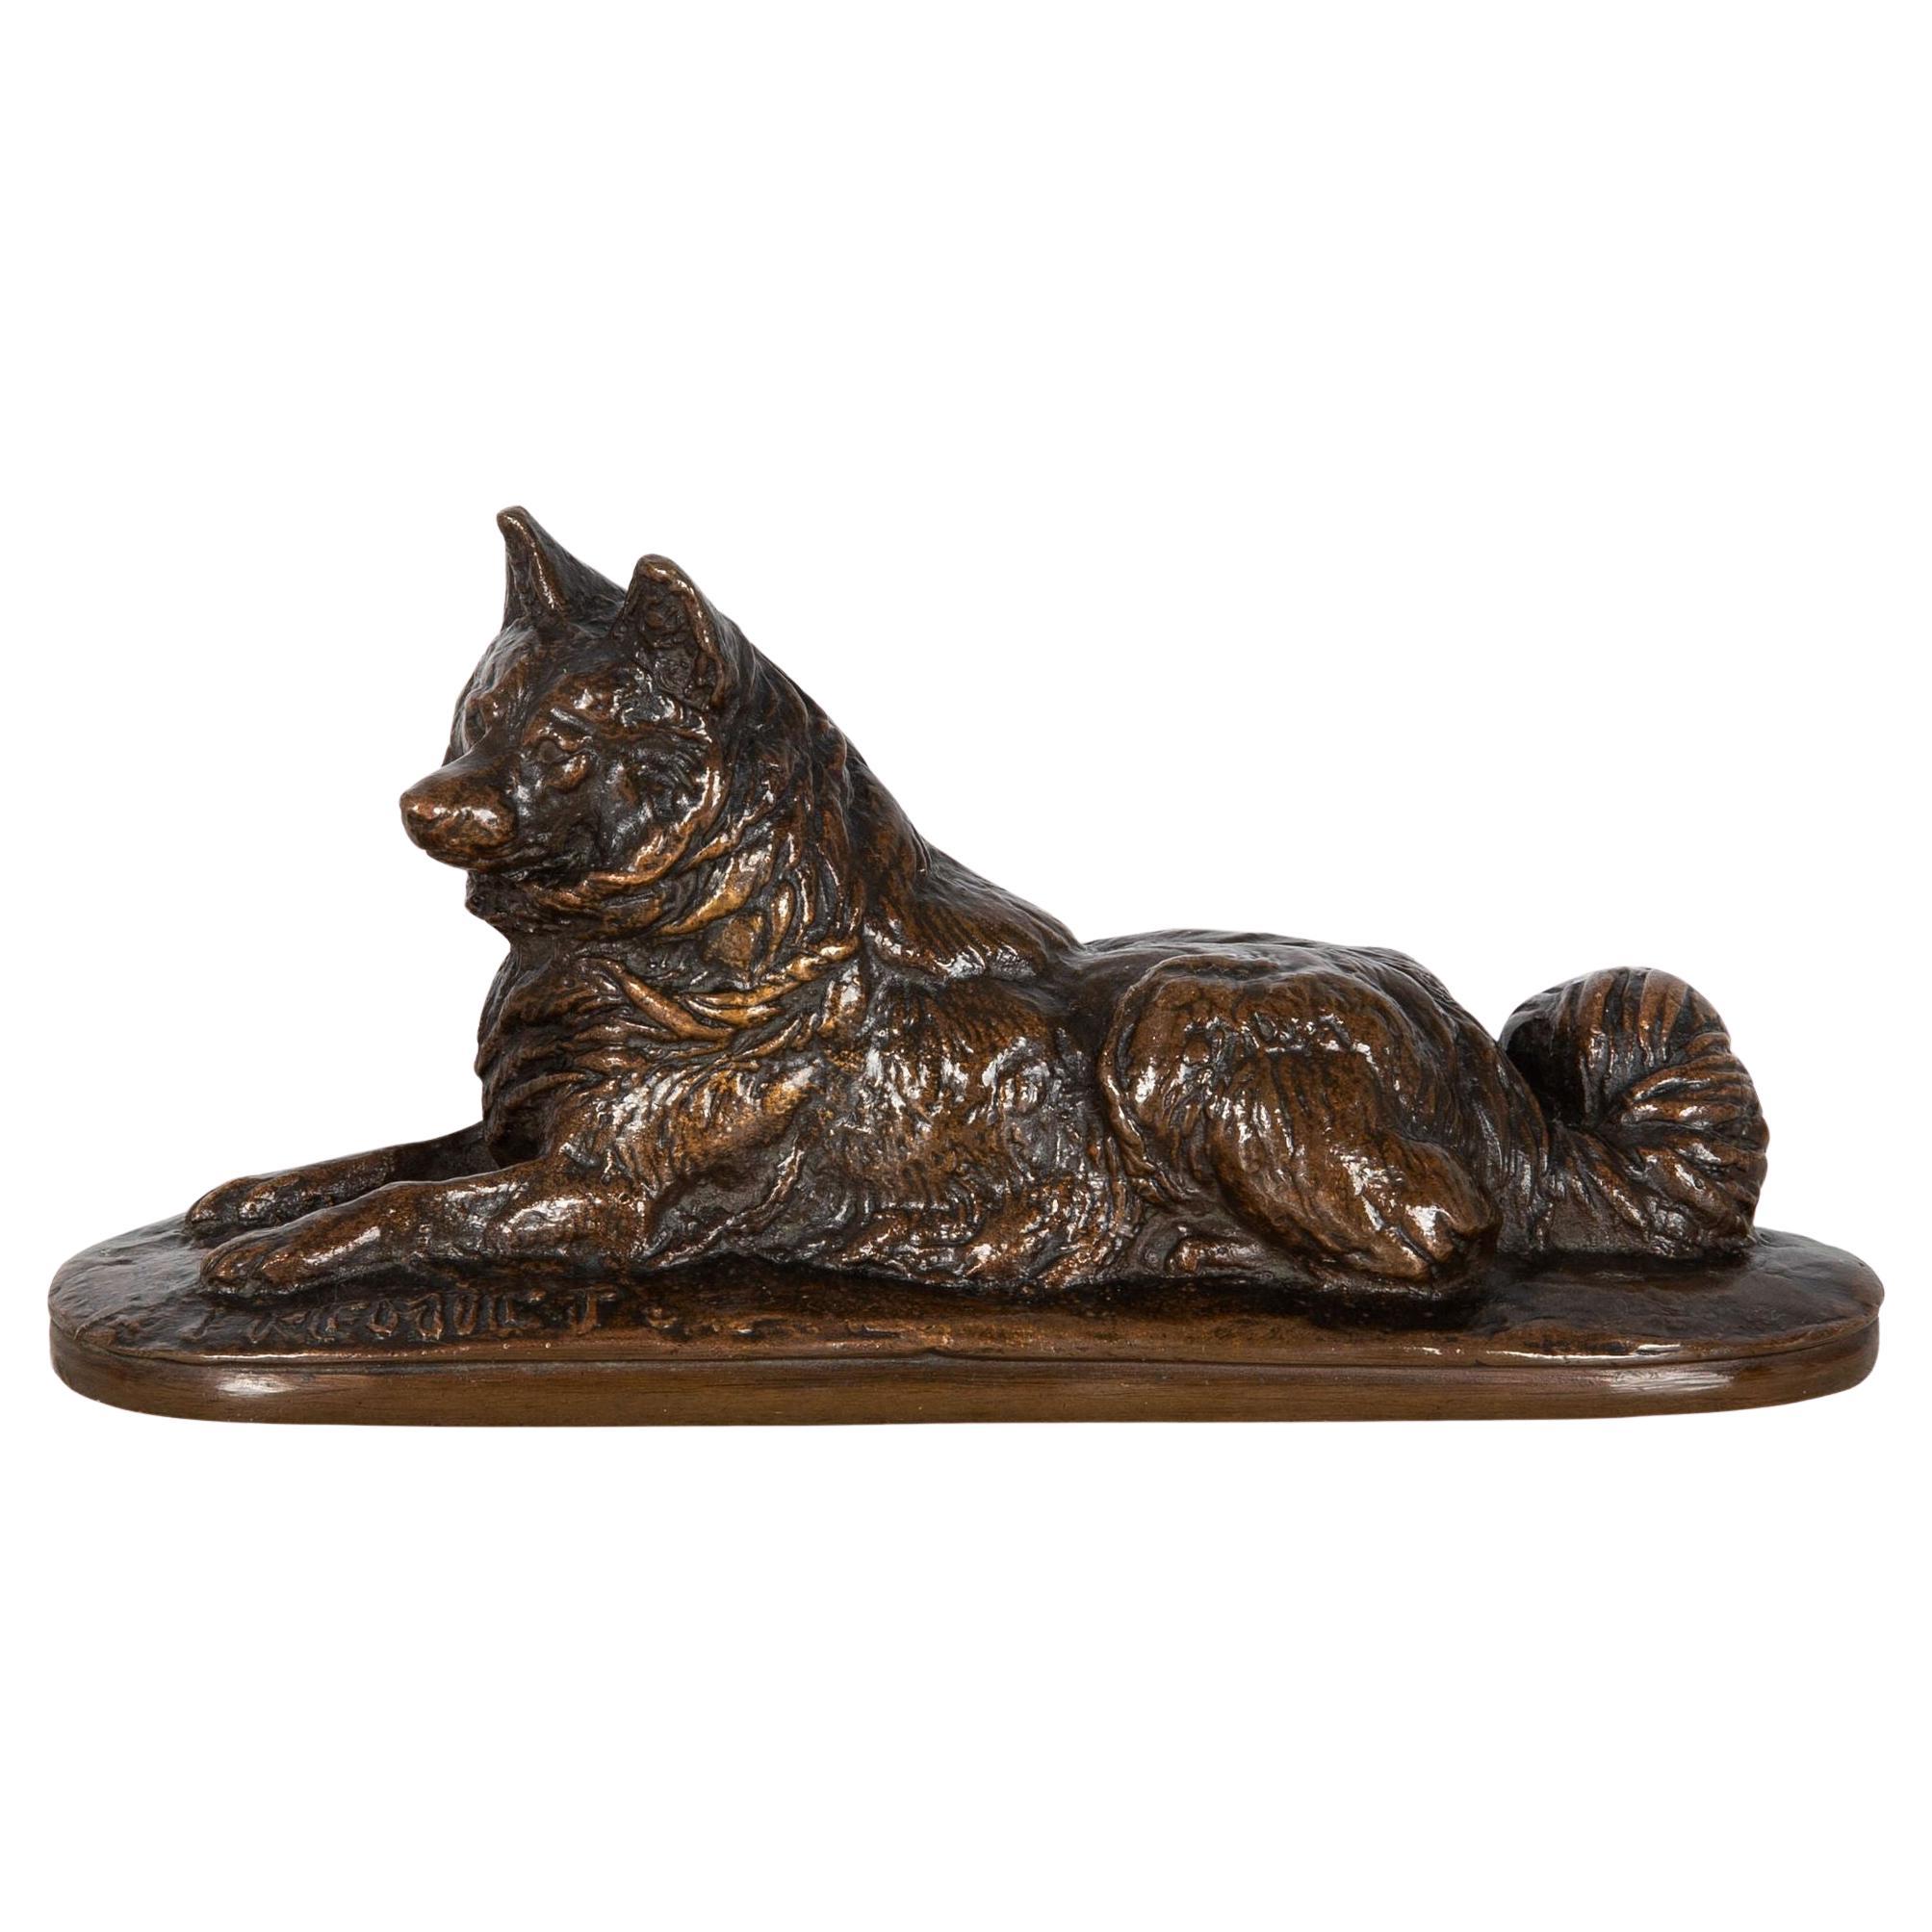 Rare Emmanuel Fremiet “Husky Dog” Bronze Sculpture, Charles More cast no. 38